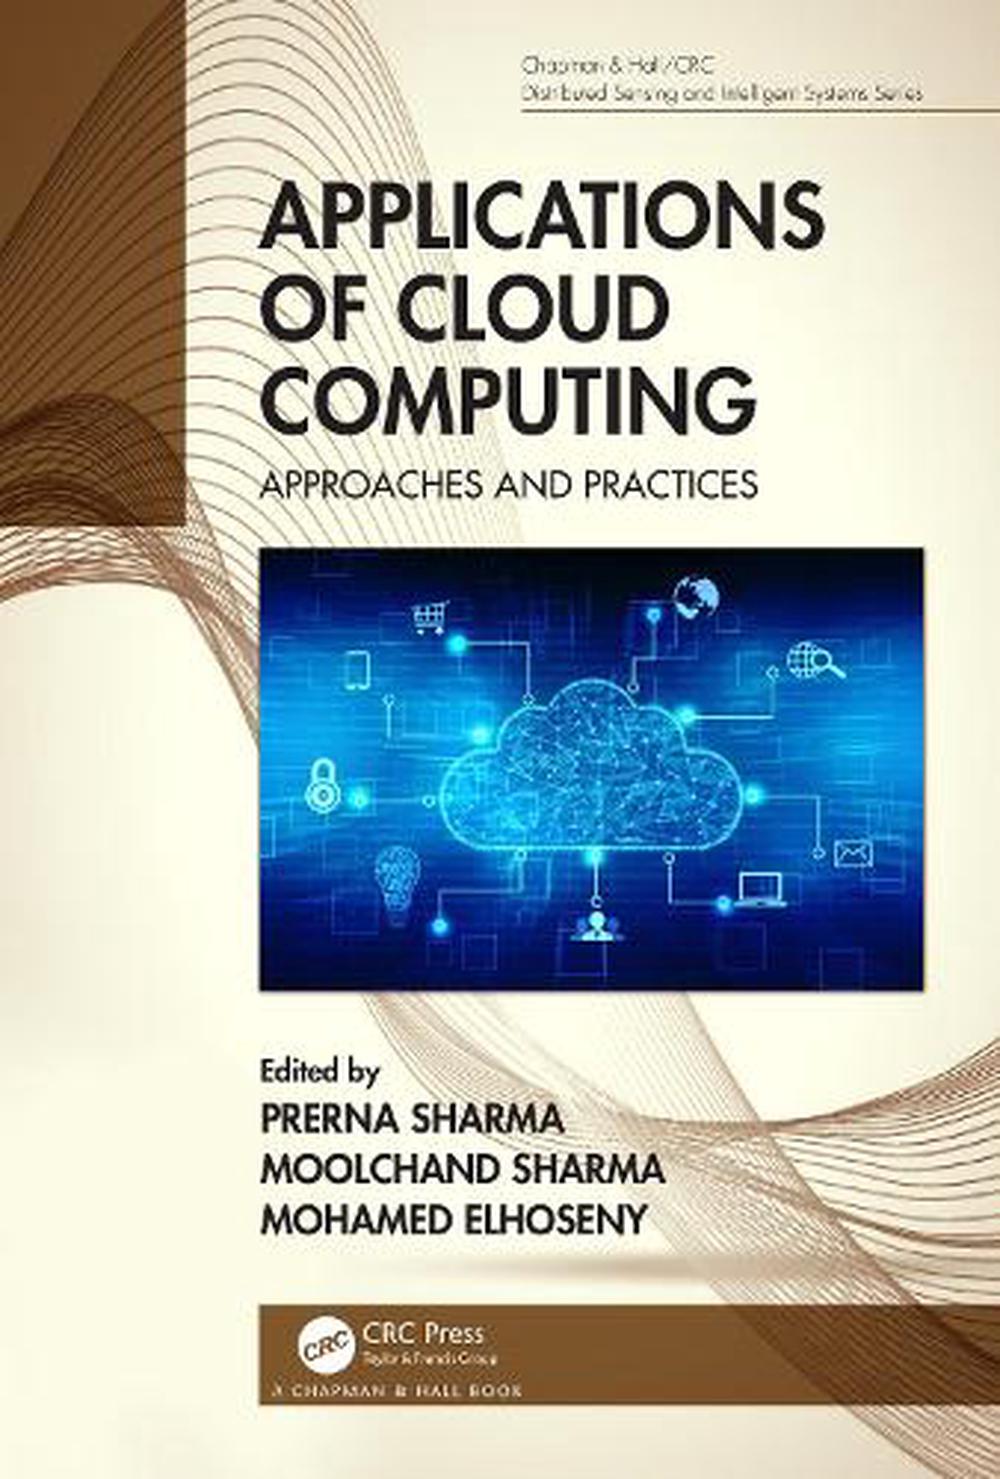 Cloud Computing Basics by T.B. Rehman